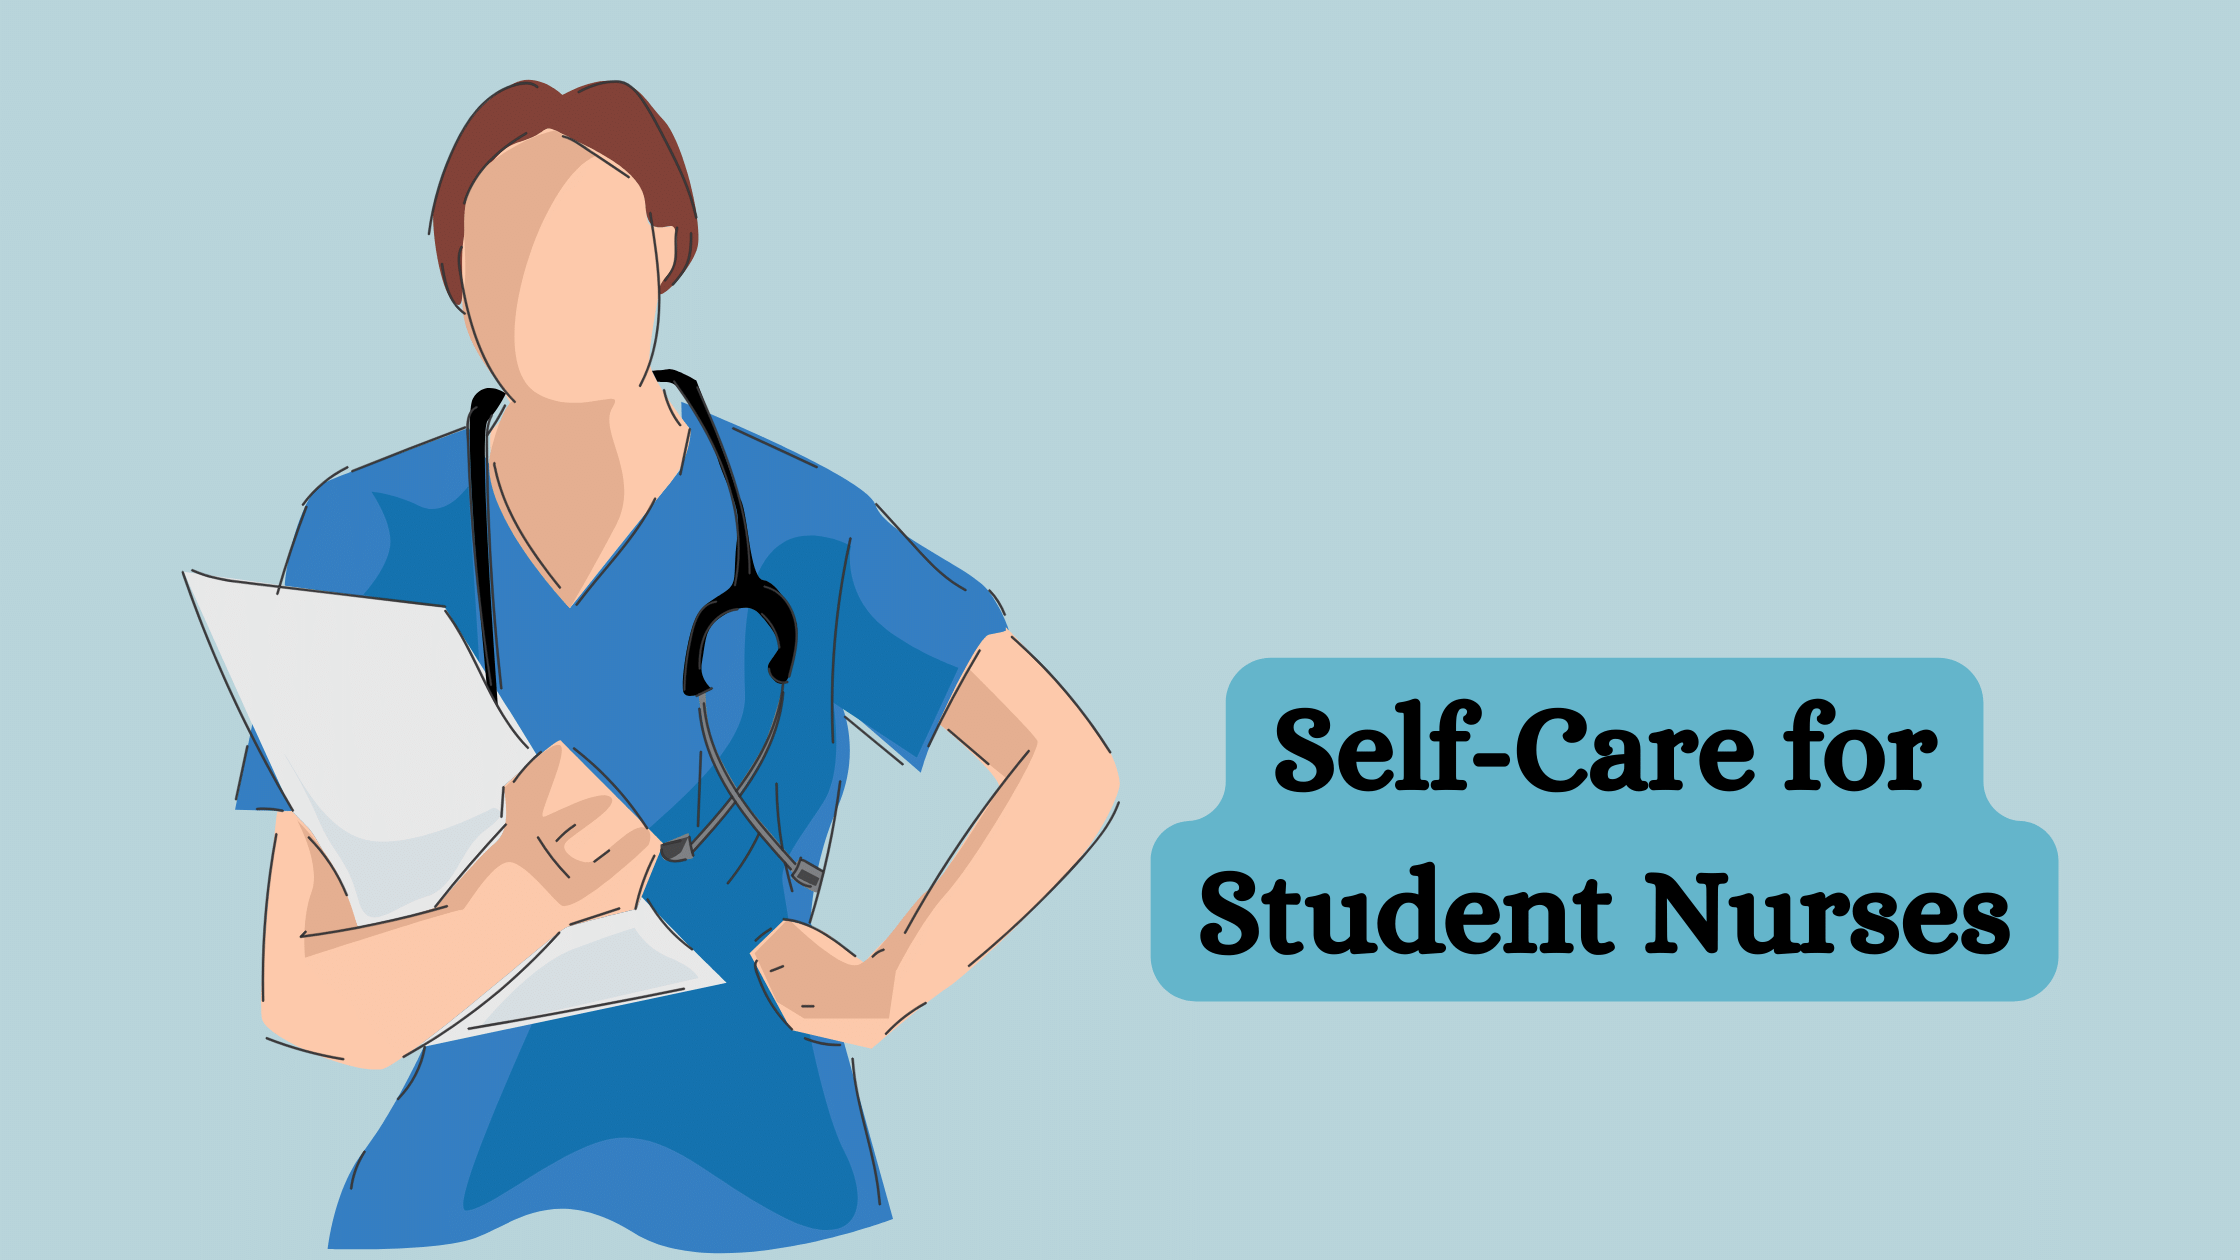 Self-Care for Student Nurses